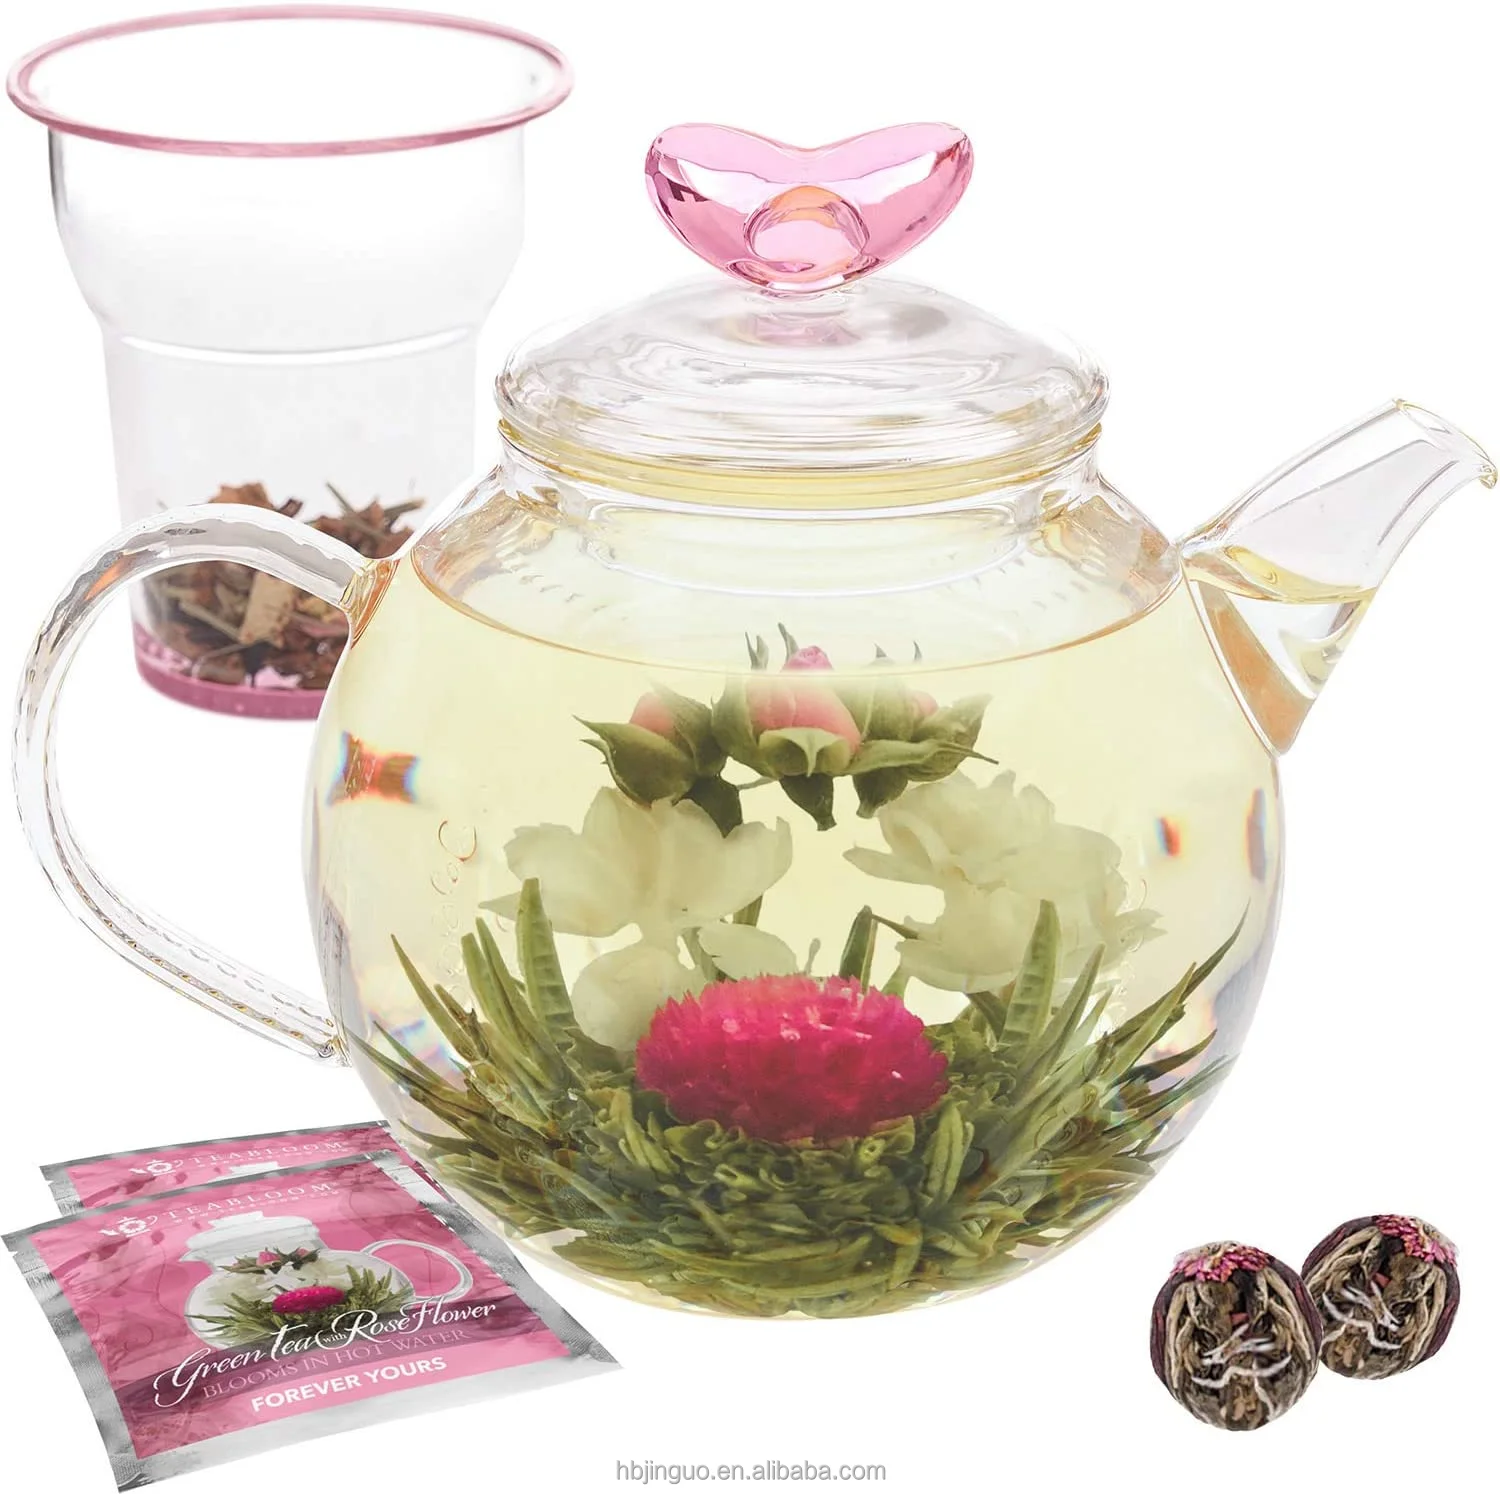 Chinese Beautiful Blooming Tea Different Kinds of Blooming Tea Ball Handmade Packaging Organic Detox Flower Tea Ball